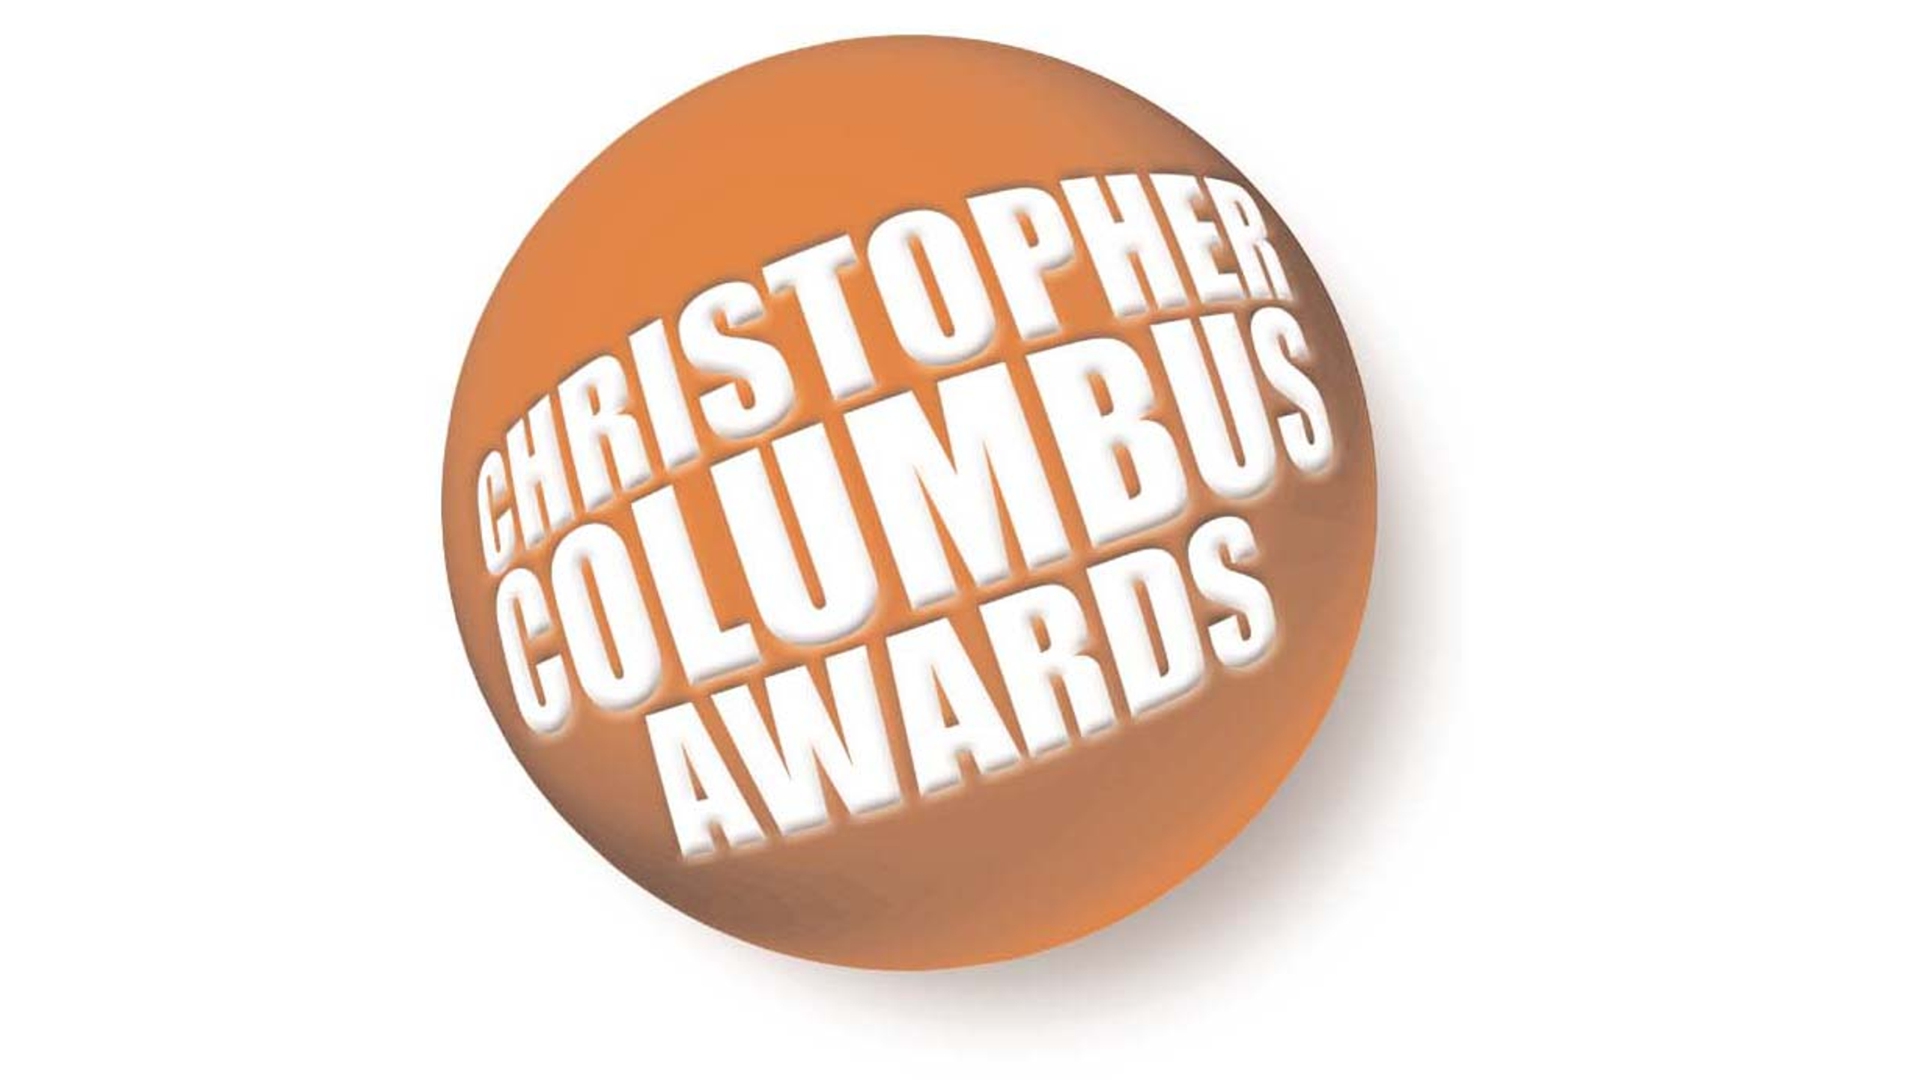 Christoper Columbus Awards at Disney World 2009